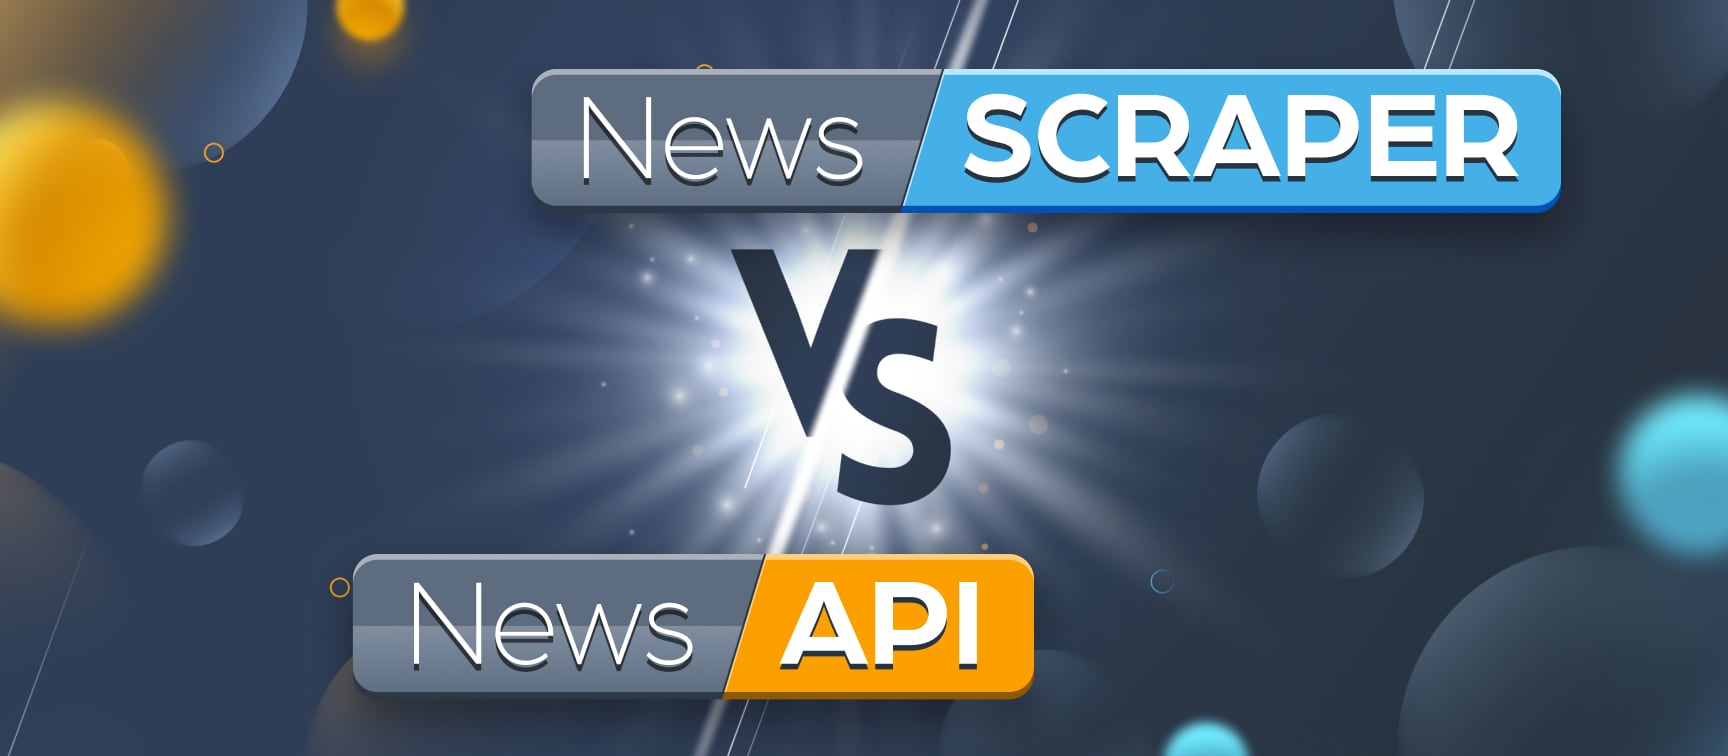 News Scraper vs. News API: What Should You Use?